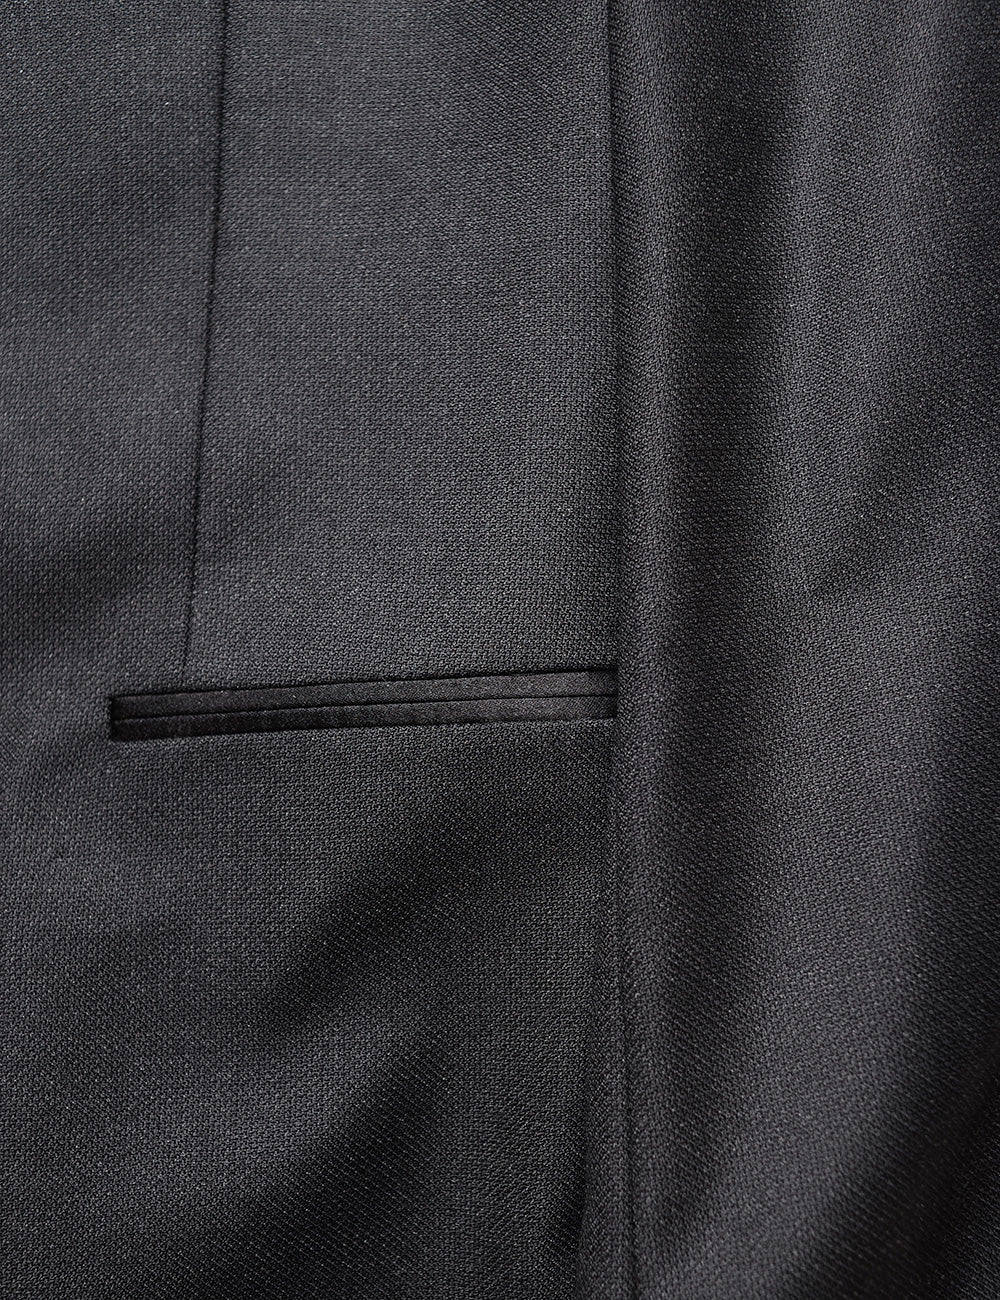 FINAL SALE: BKT50 Shawl Collar Tuxedo Jacket in Tonal Birdseye - Black with Satin Lapel